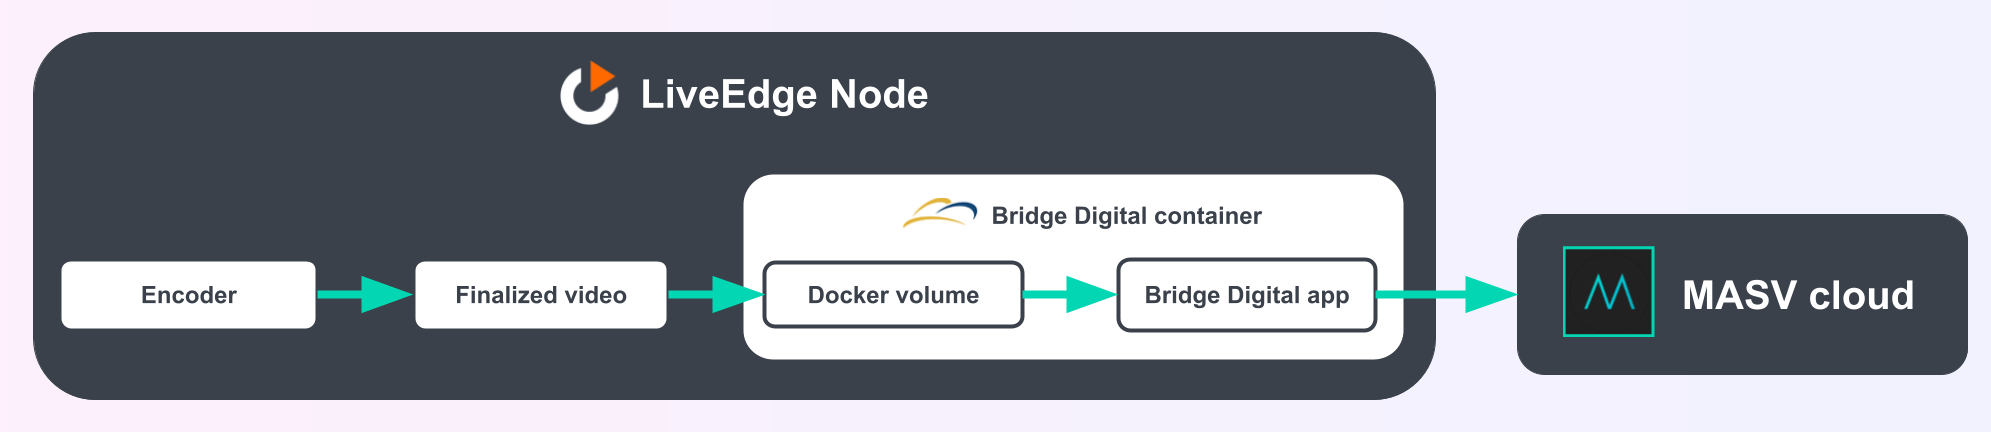 Bridge Digital Application Architecture diagram